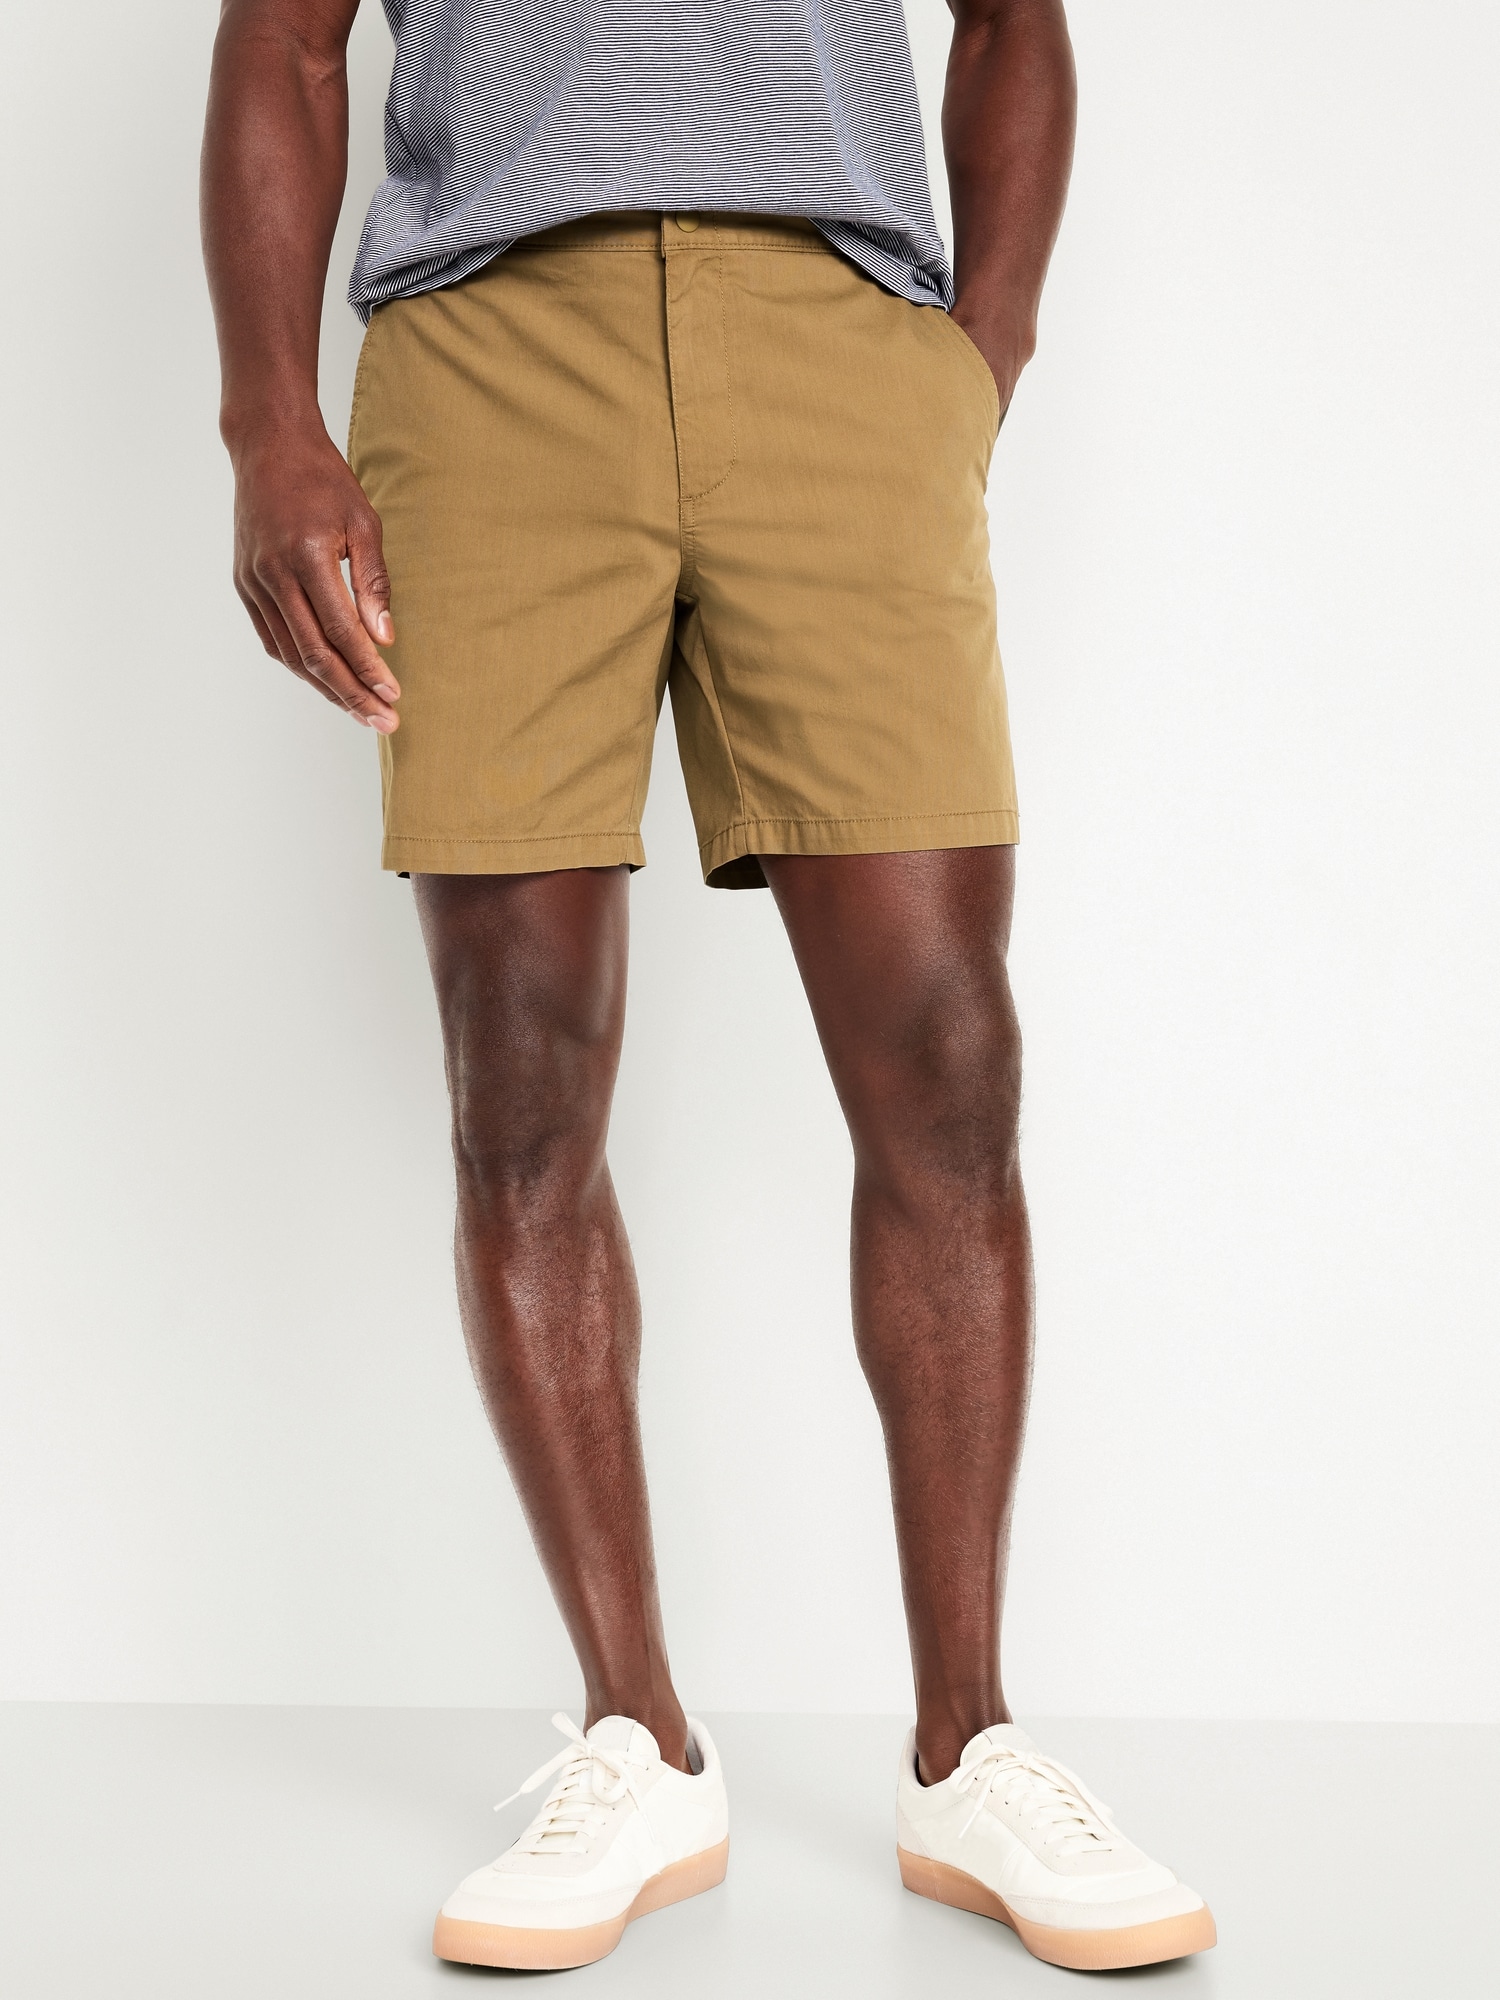 Slim Built-In Flex Tech Jogger Shorts - 7-inch inseam